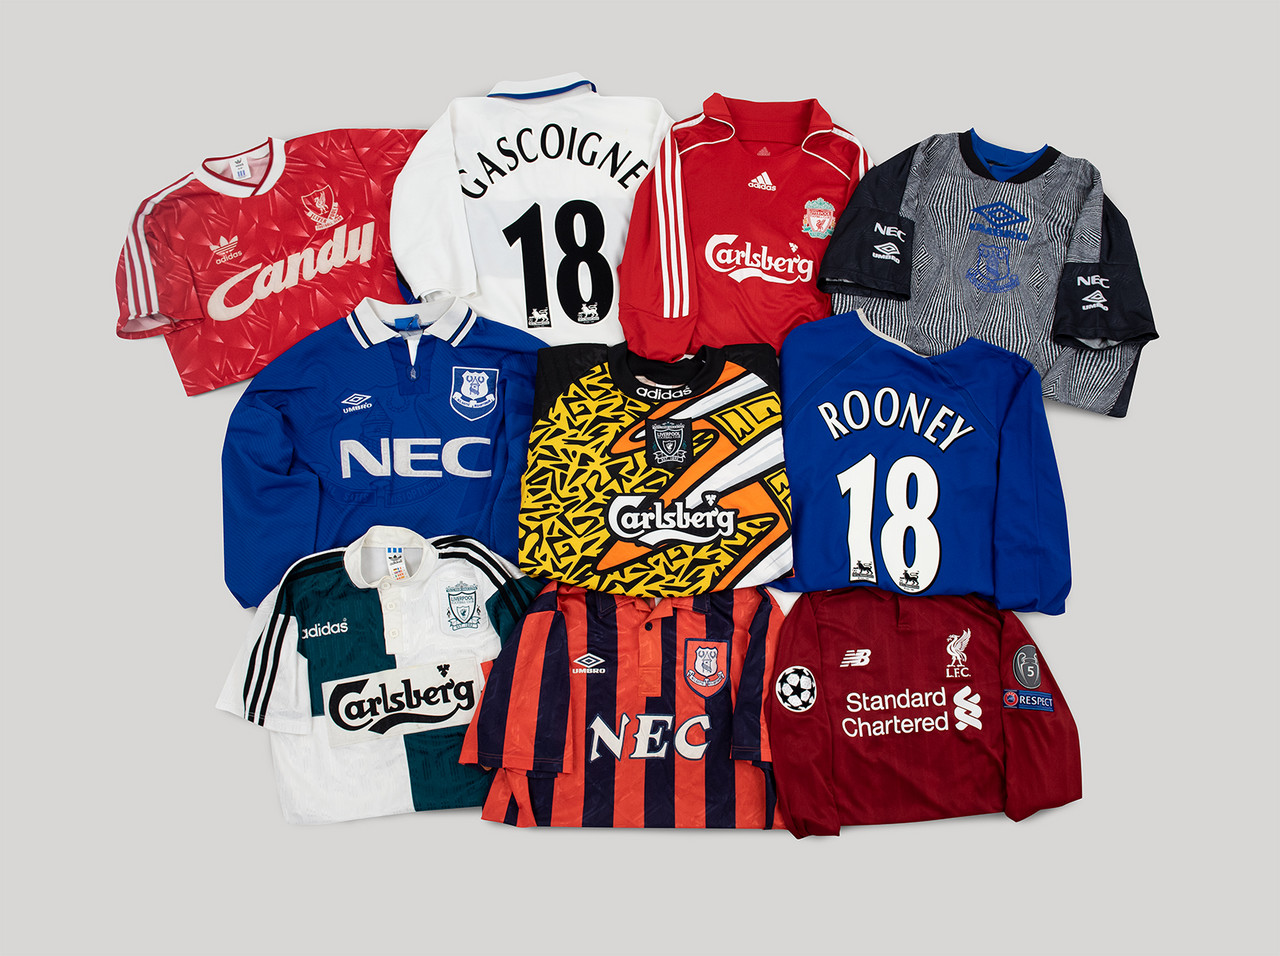 Classic Football Shirts returns to Liverpool - VAVEL International